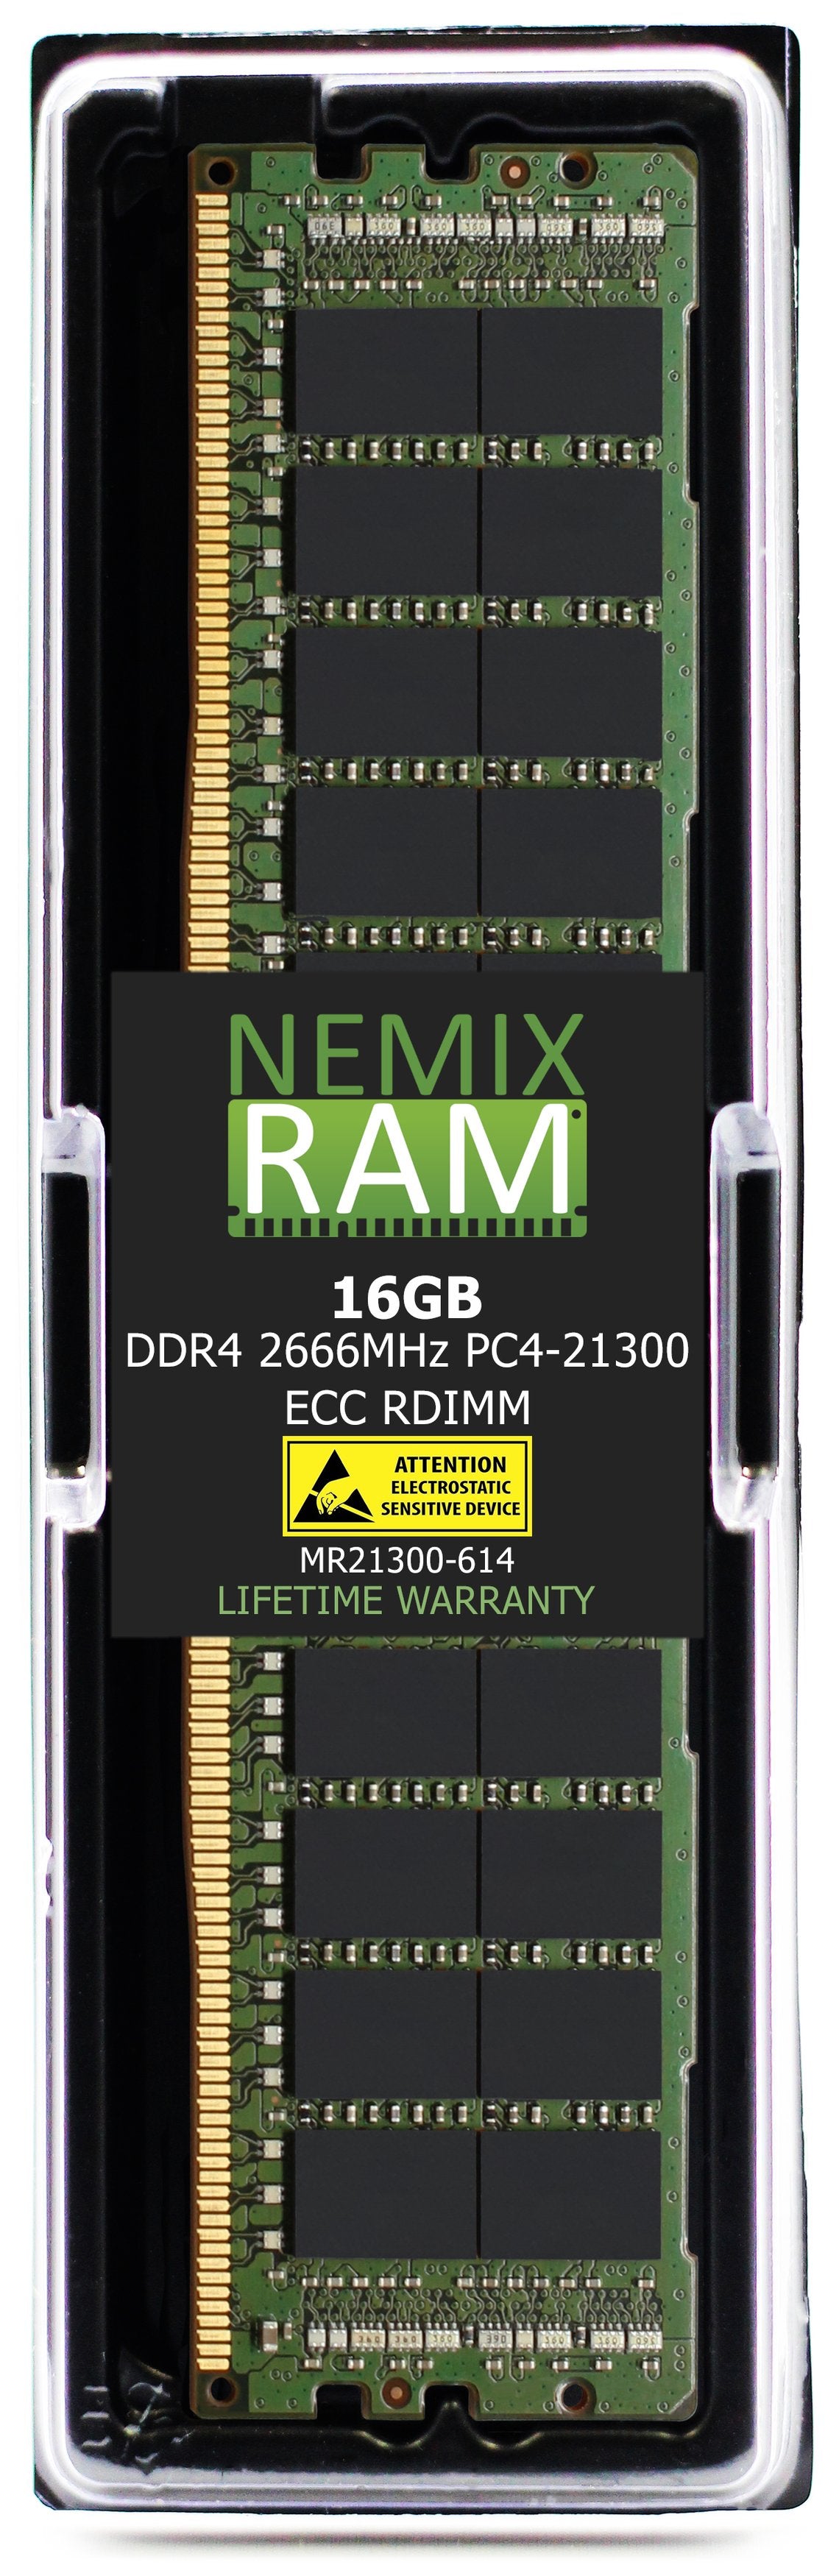 16GB DDR4 2666MHZ PC4-21300 RDIMM Compatible with Supermicro MEM-DR416L-HL02-ER26